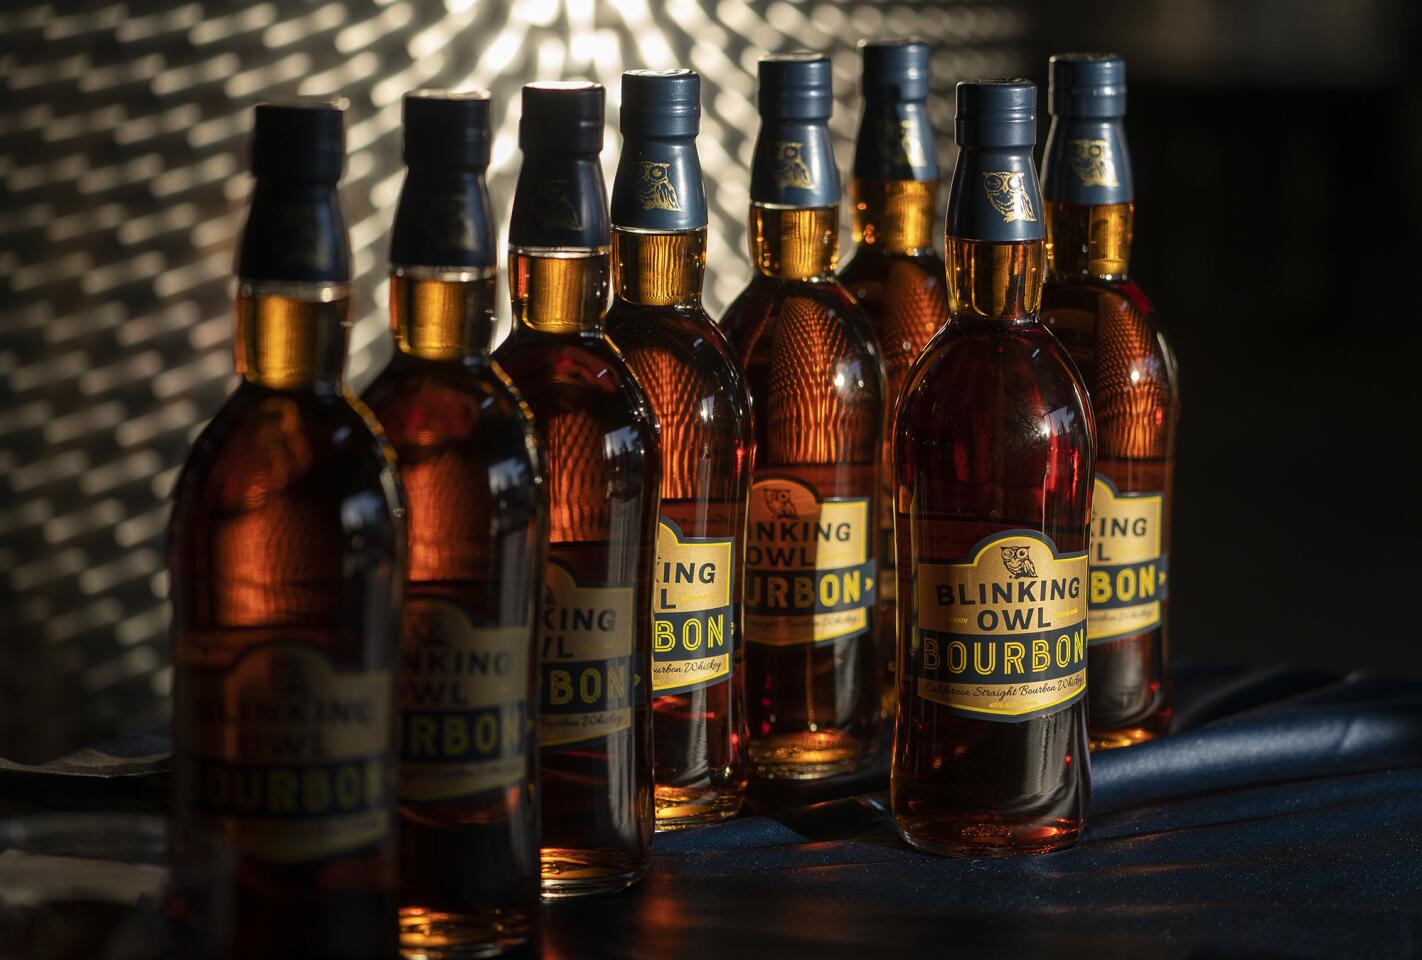 The Blinking Owl California straight bourbon whiskey at the Blinking Owl Distillery in Santa Ana.